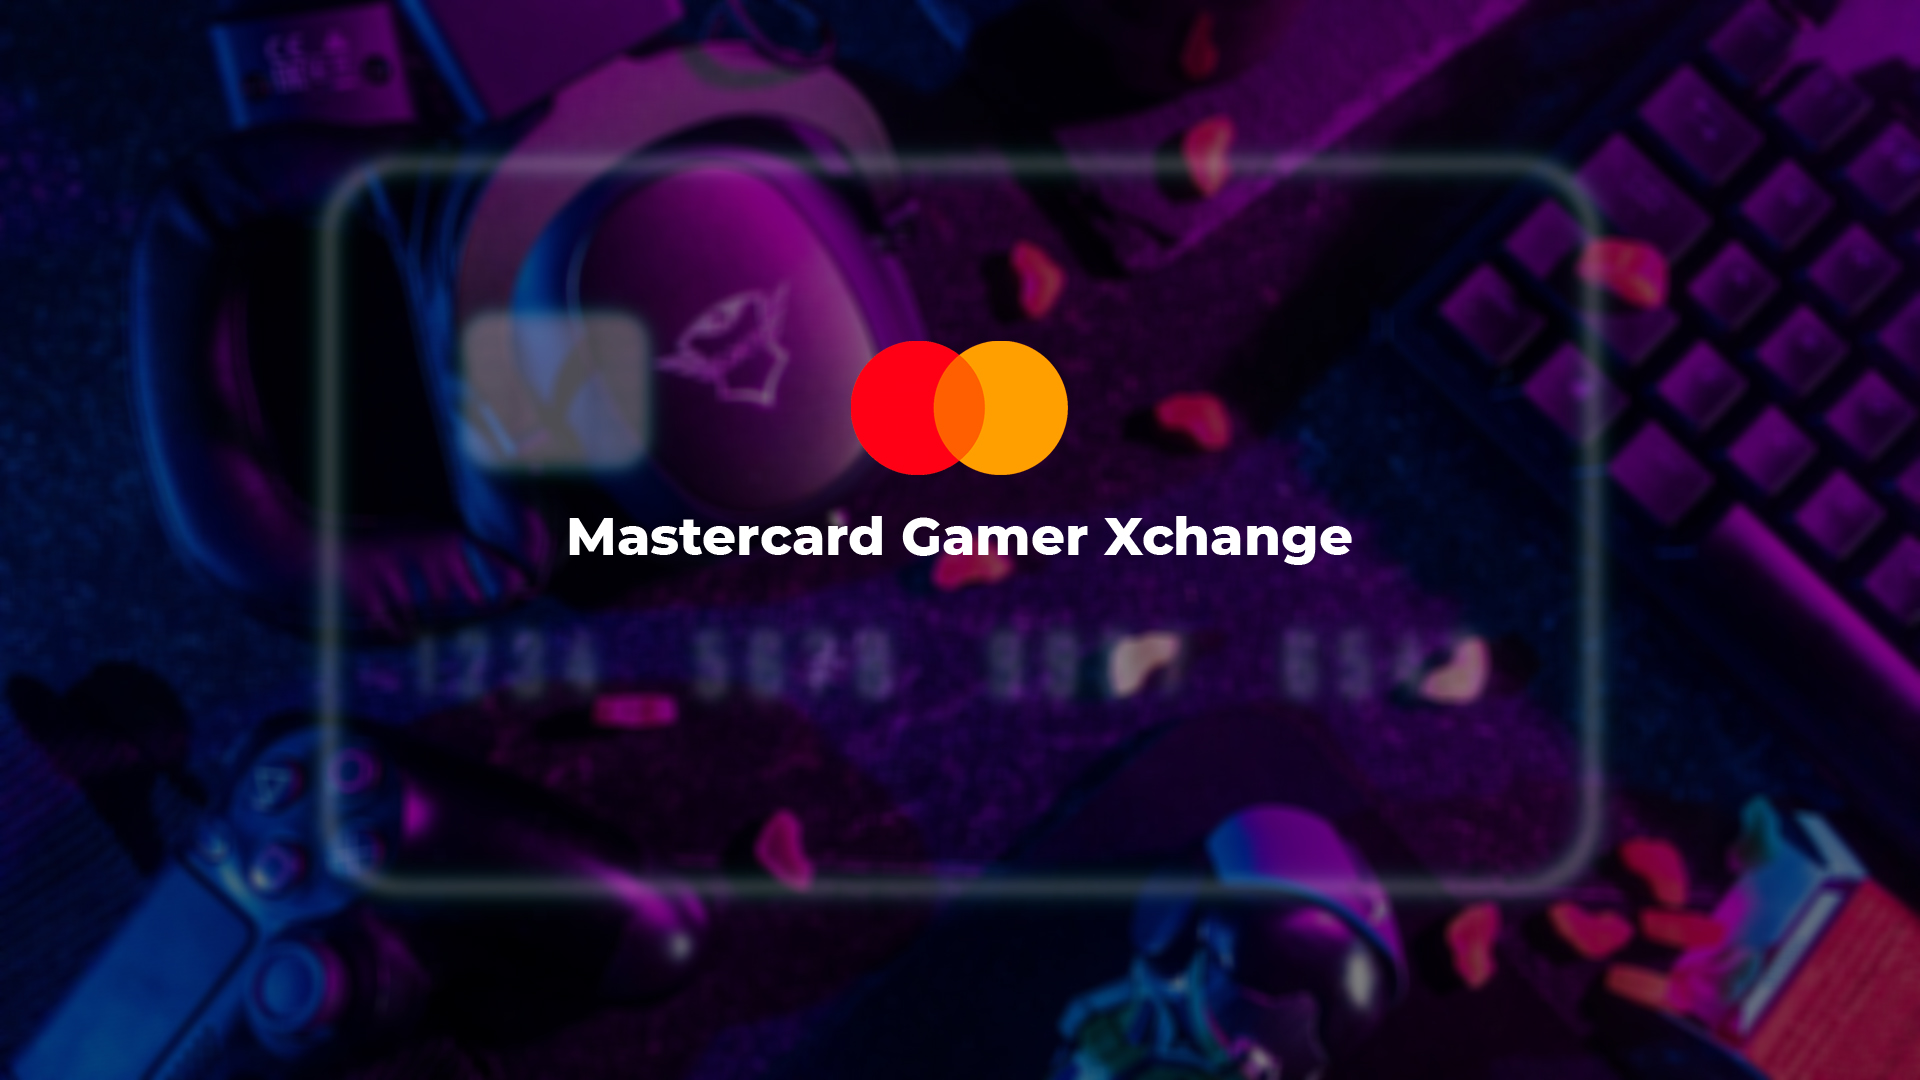 Mastercard launches Mastercard Gamer Xchange